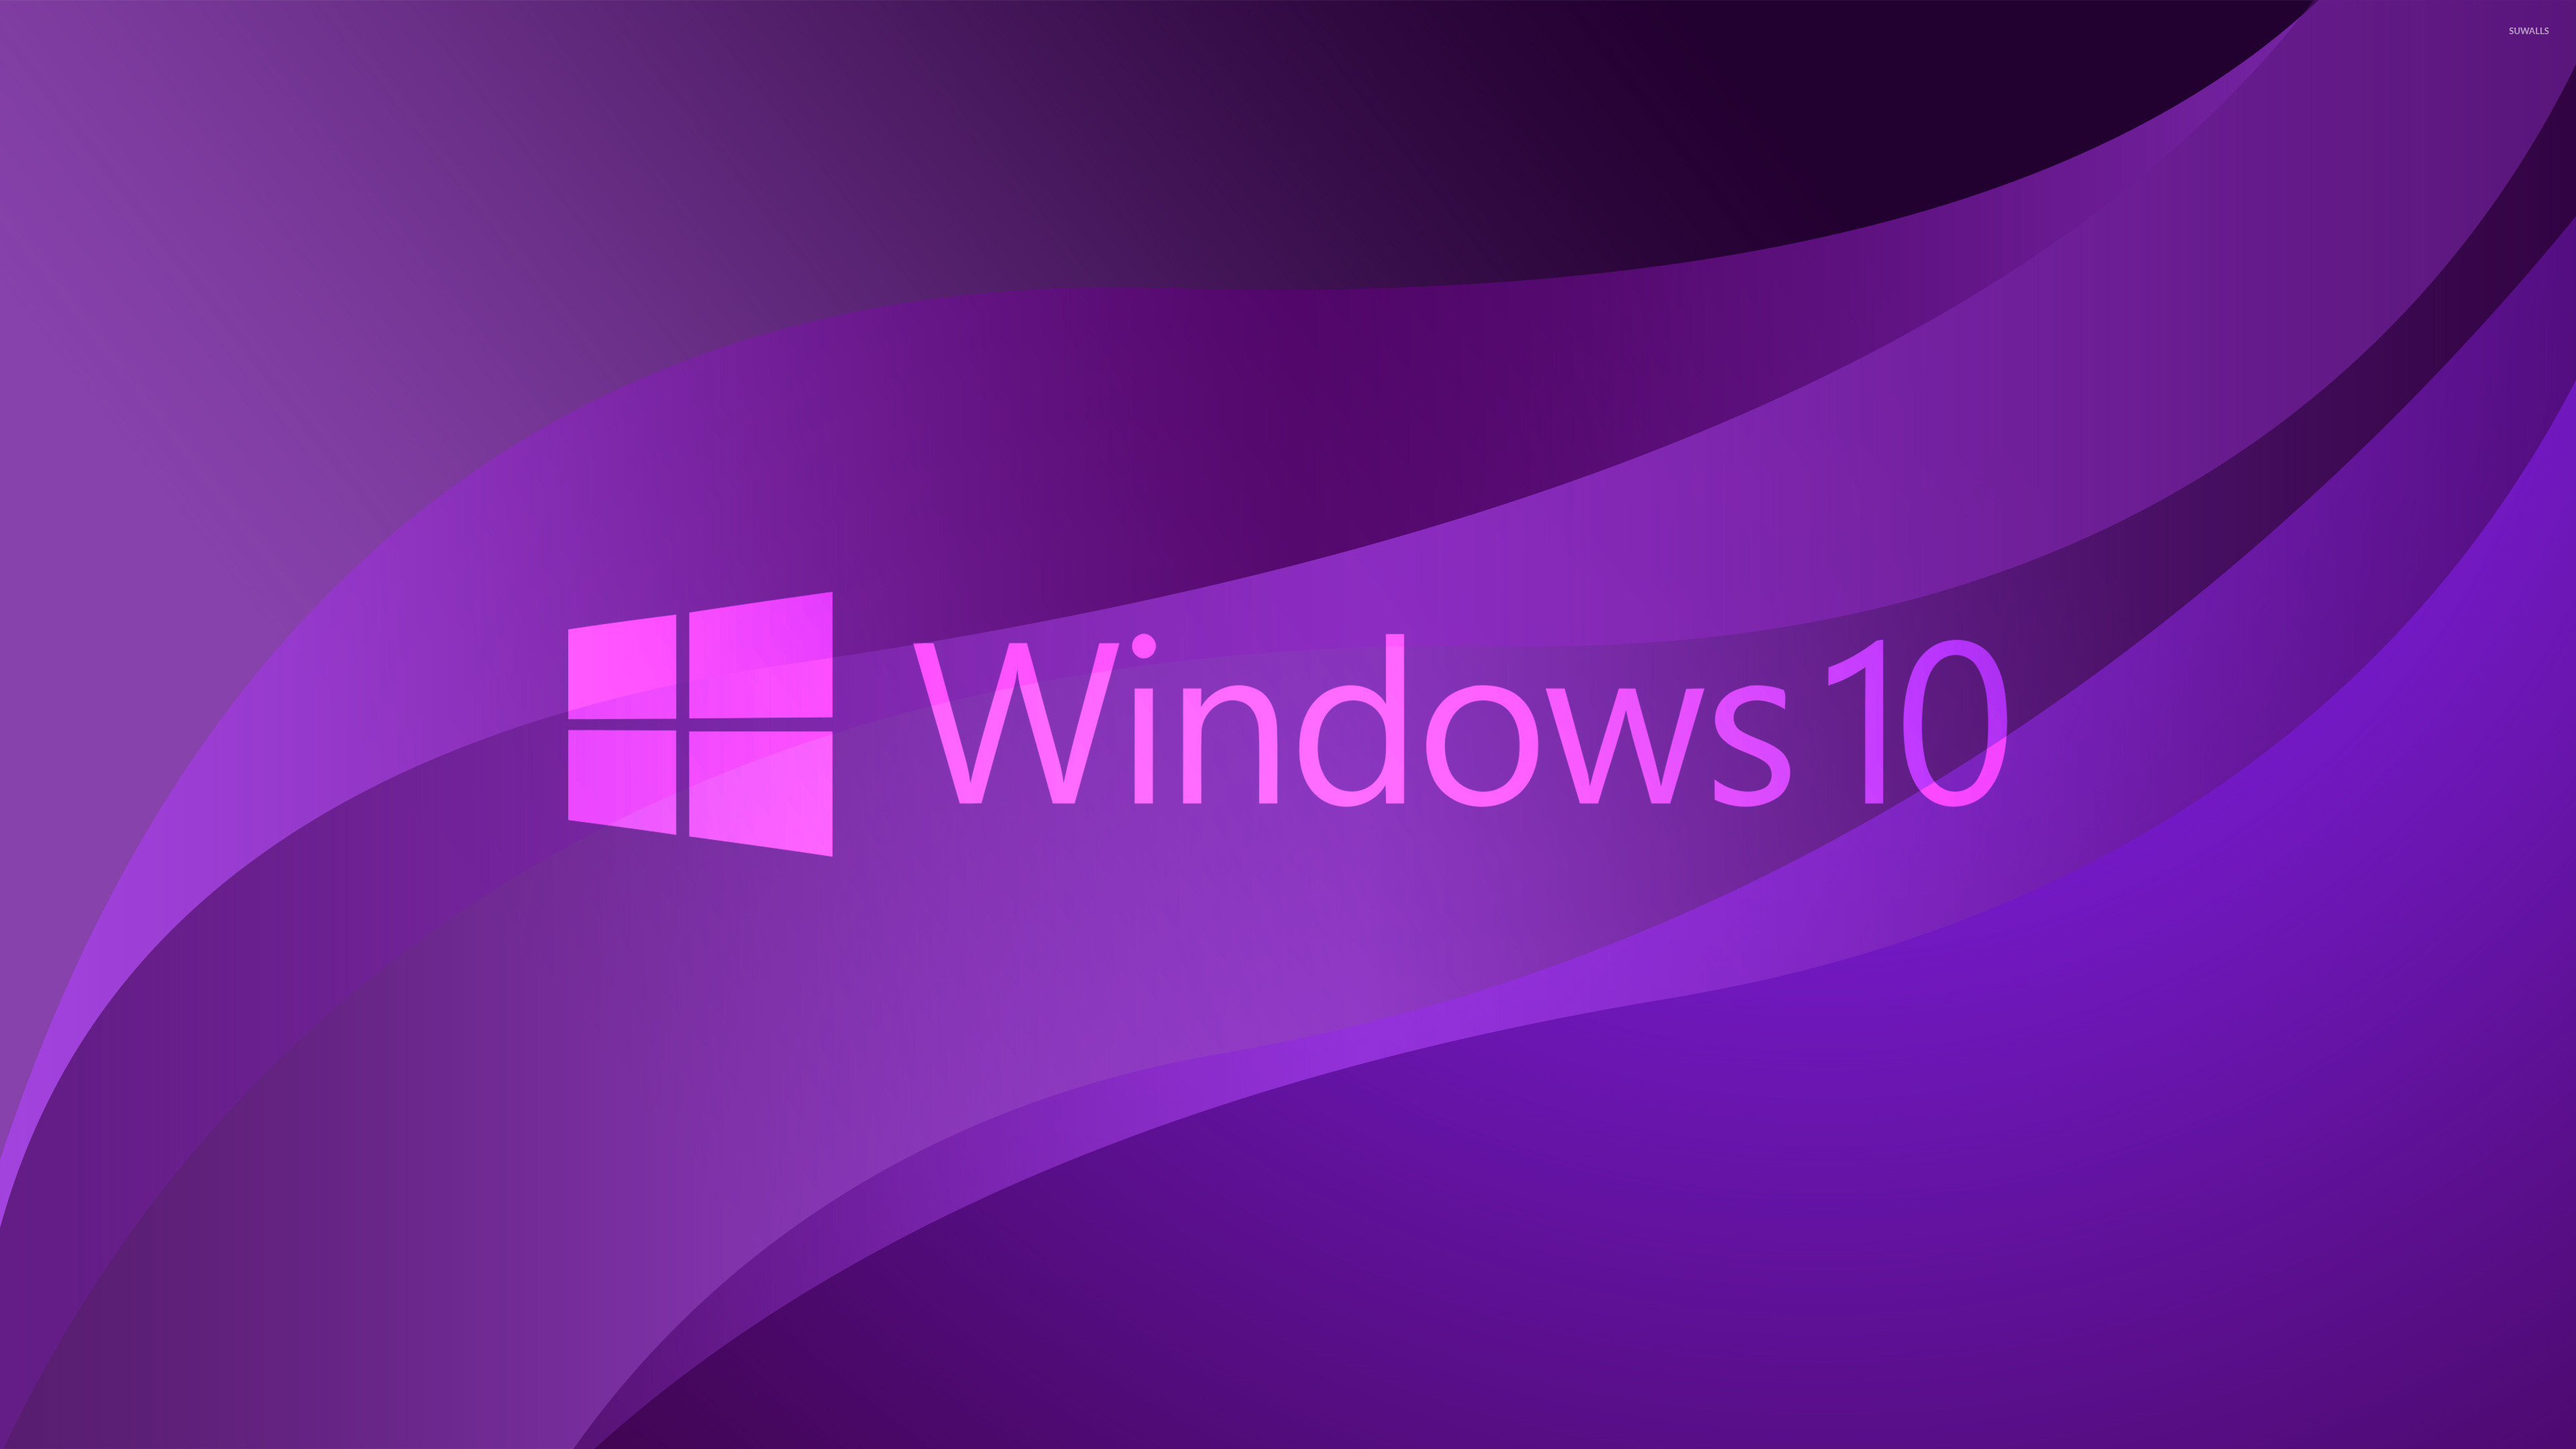 3840x2160 Windows 10 transparent text logo on purple wallpaper